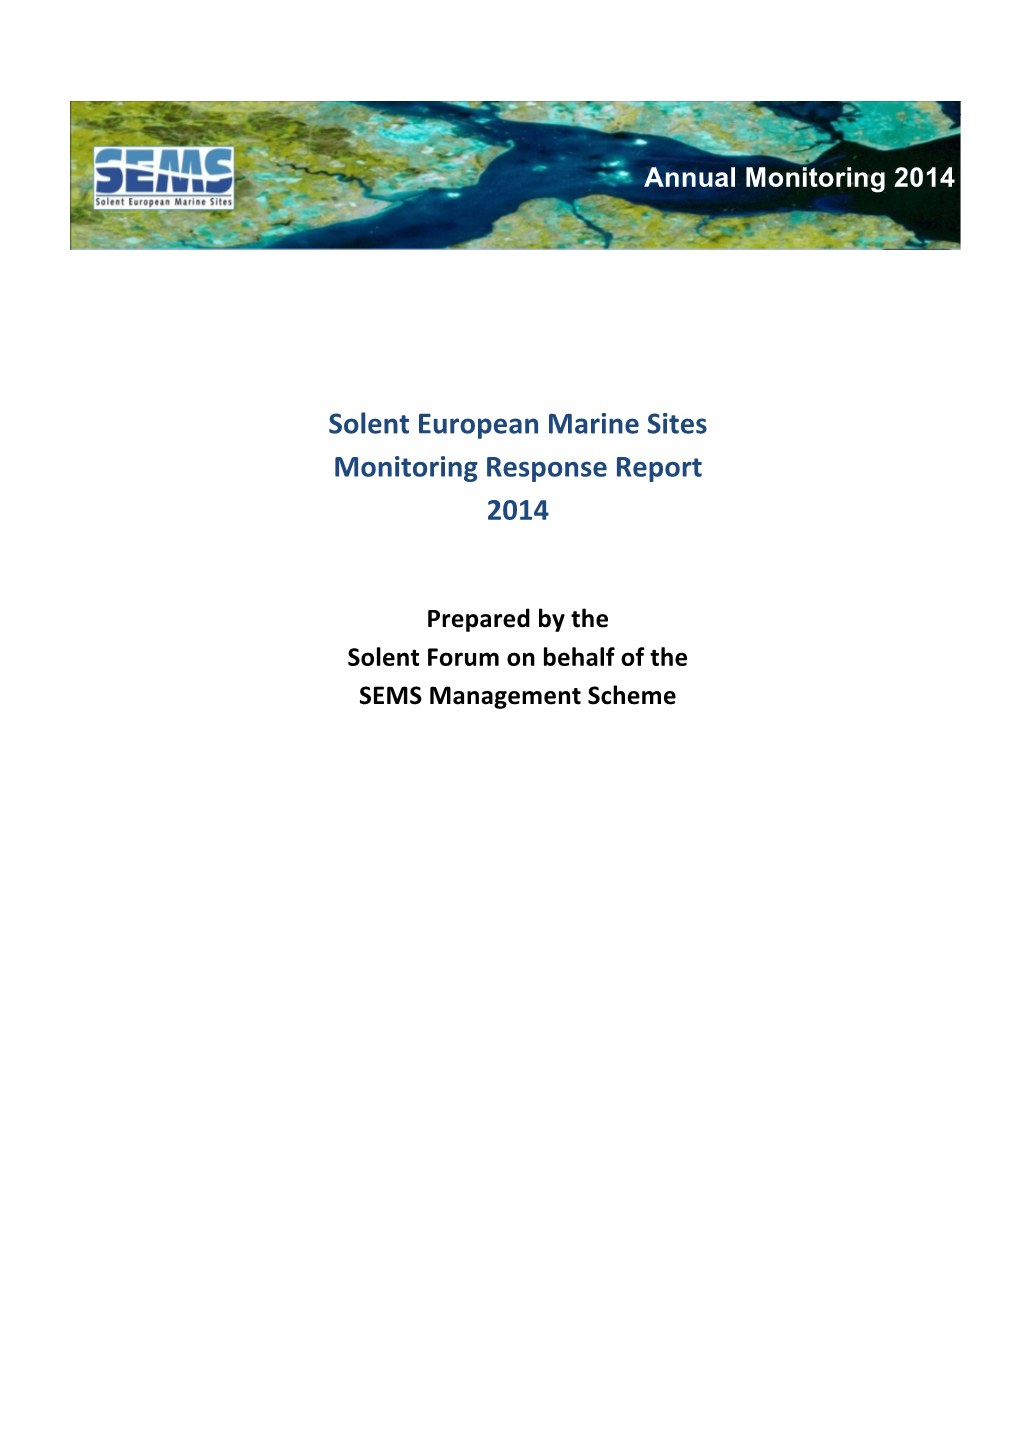 SEMS Annual Monitoring Response Report, 2014